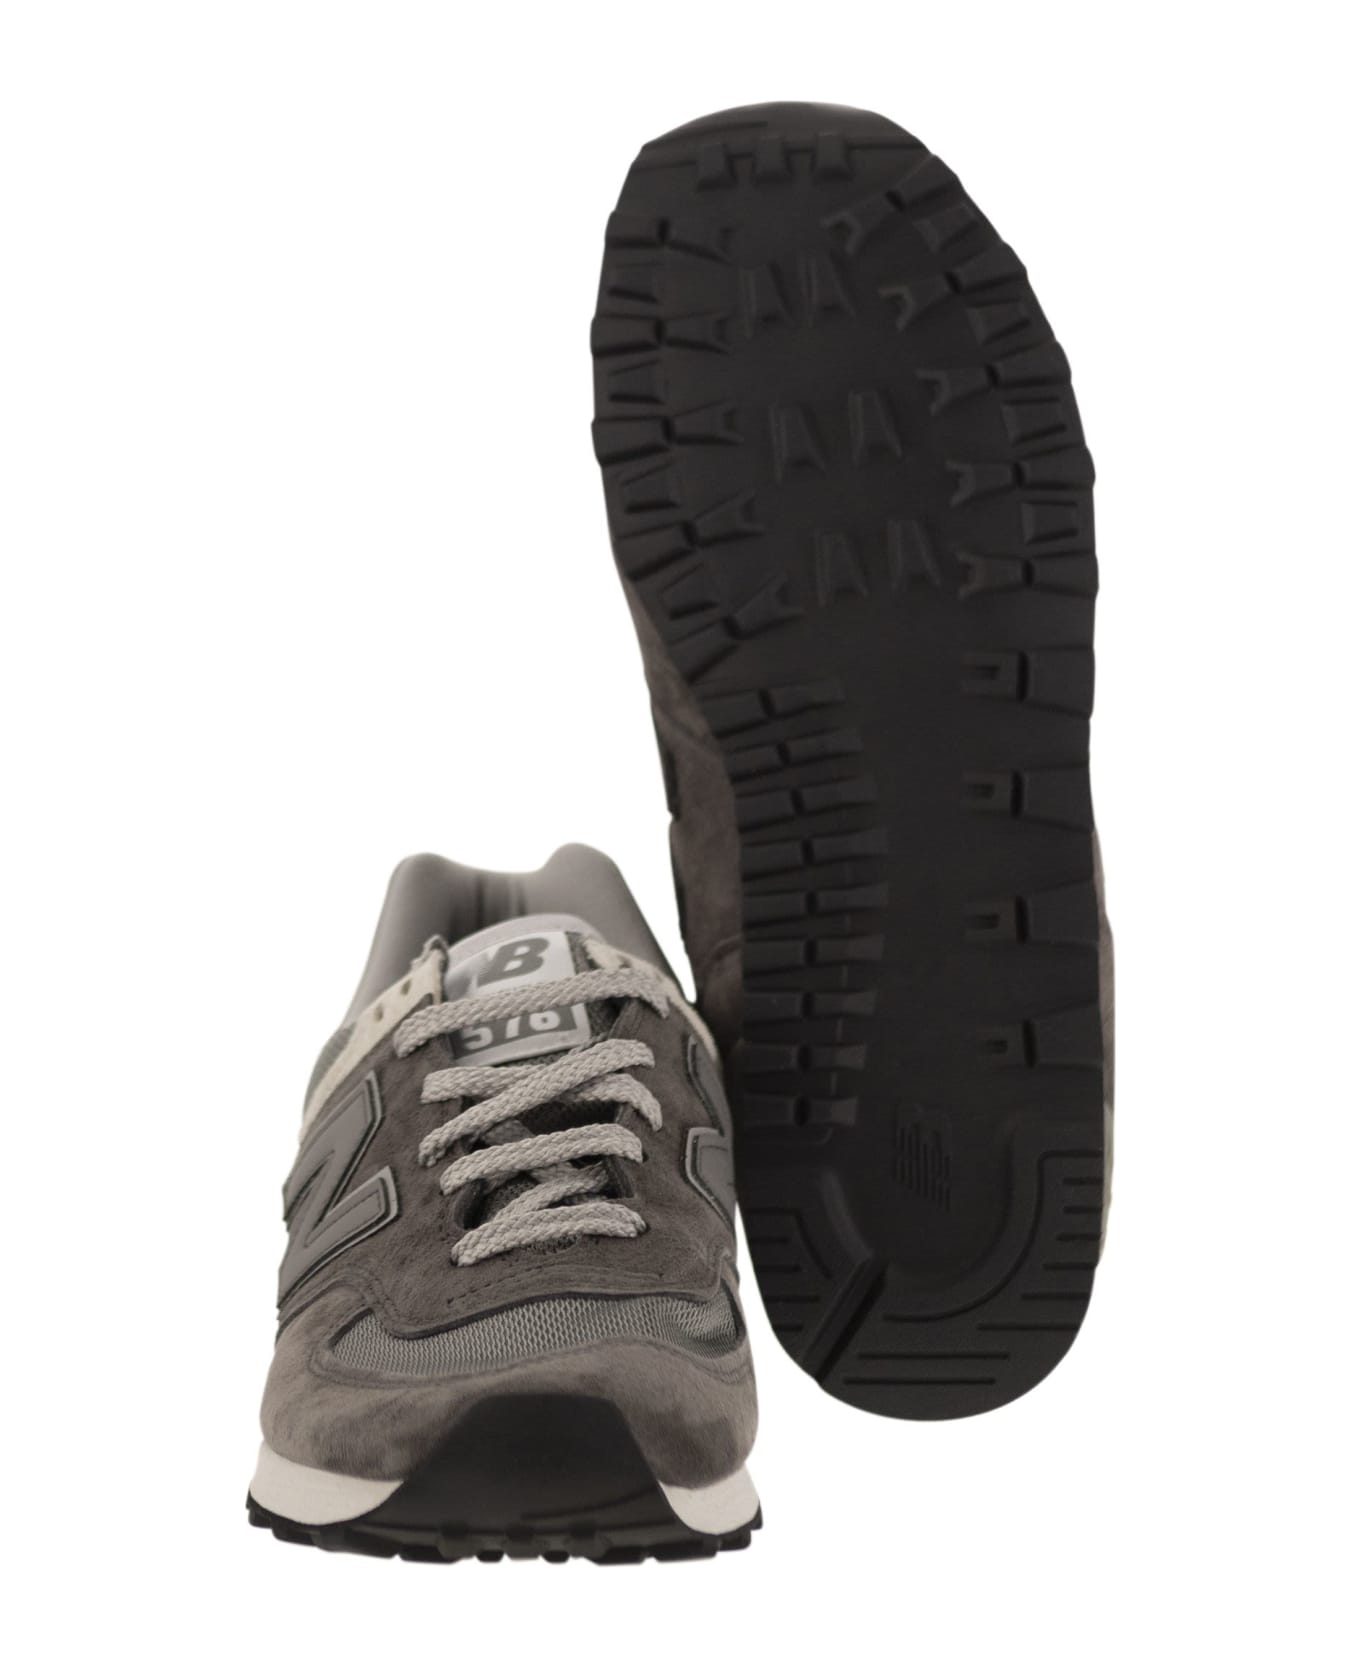 New Balance 576 - Sneakers - Grey